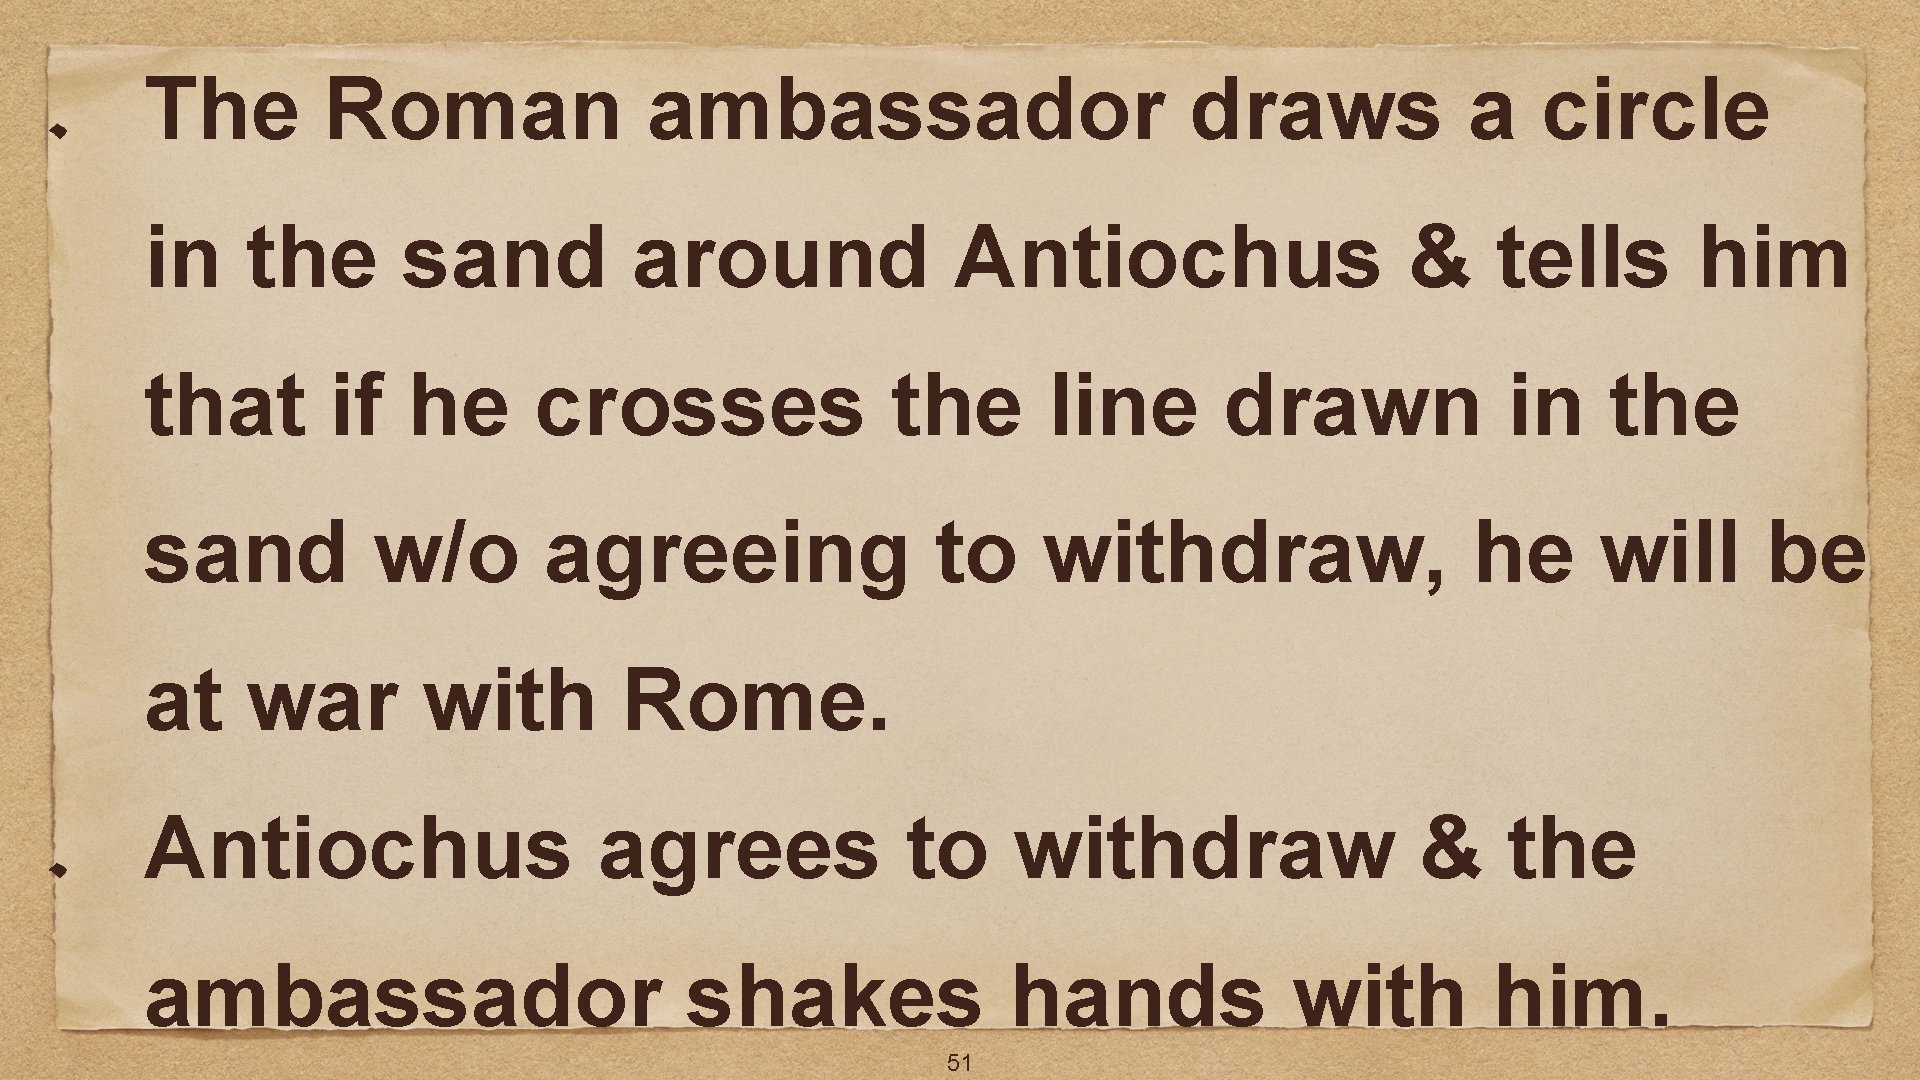 The Roman ambassador draws a circle in the sand around Antiochus & tells him